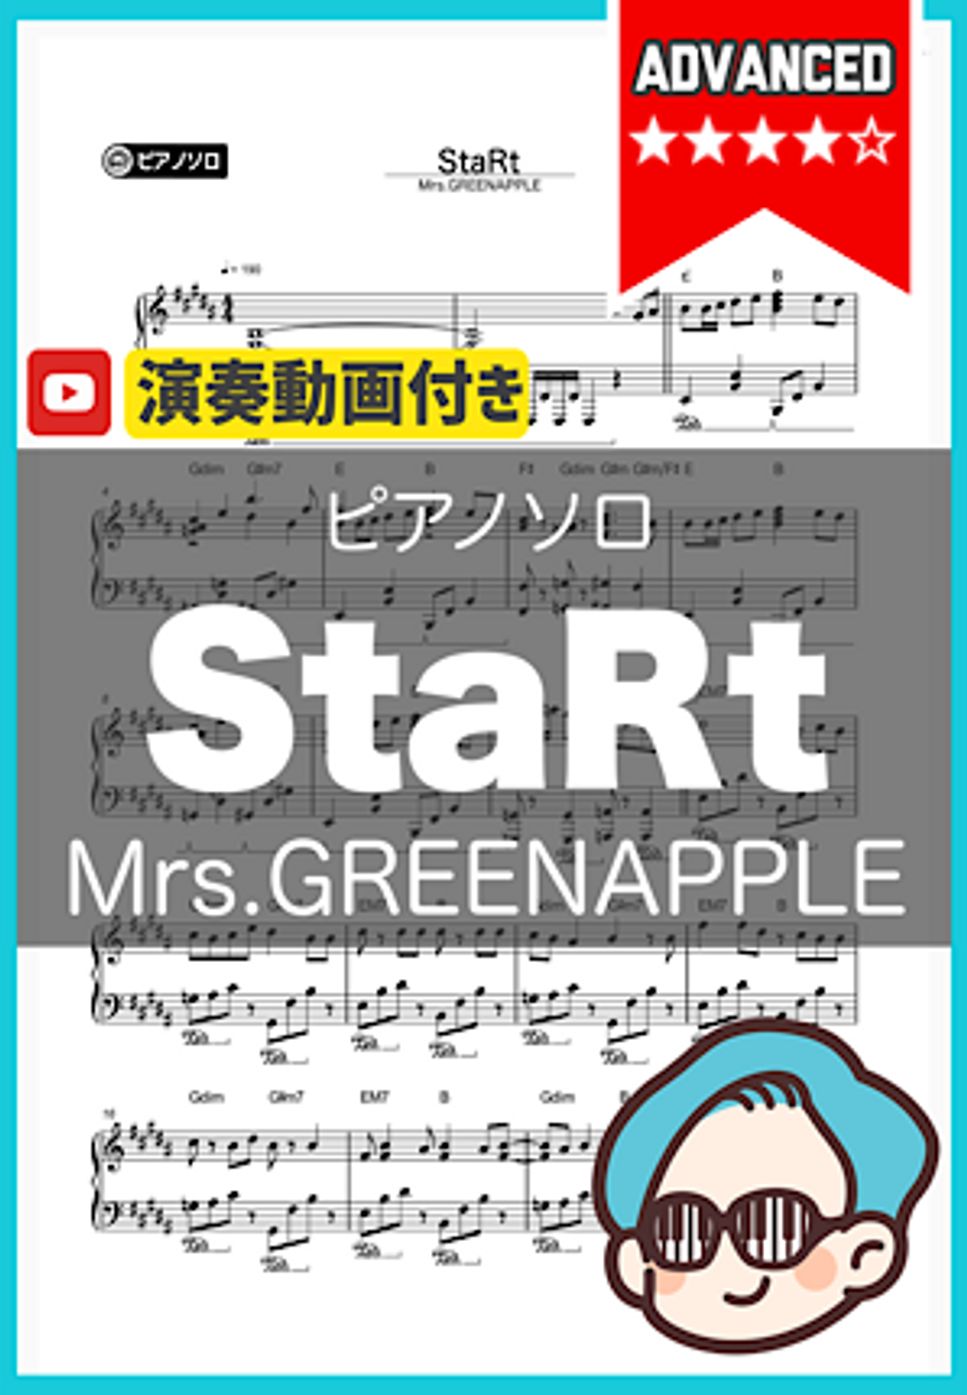 Mrs.GREENAPPLE - StaRt by シータピアノ